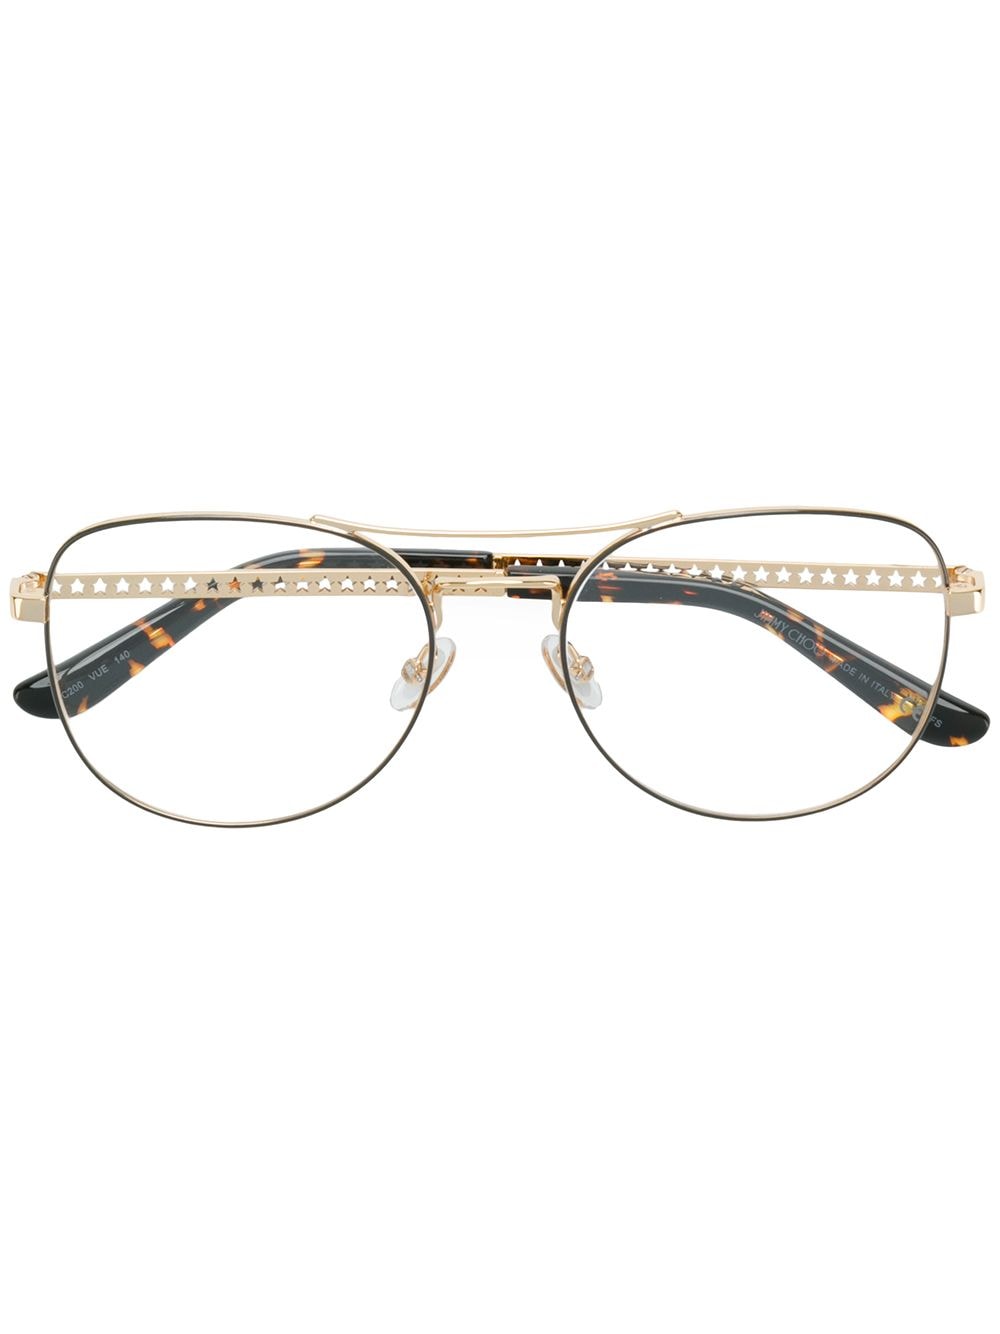 Jimmy Choo Eyewear square frames - Metallic von Jimmy Choo Eyewear